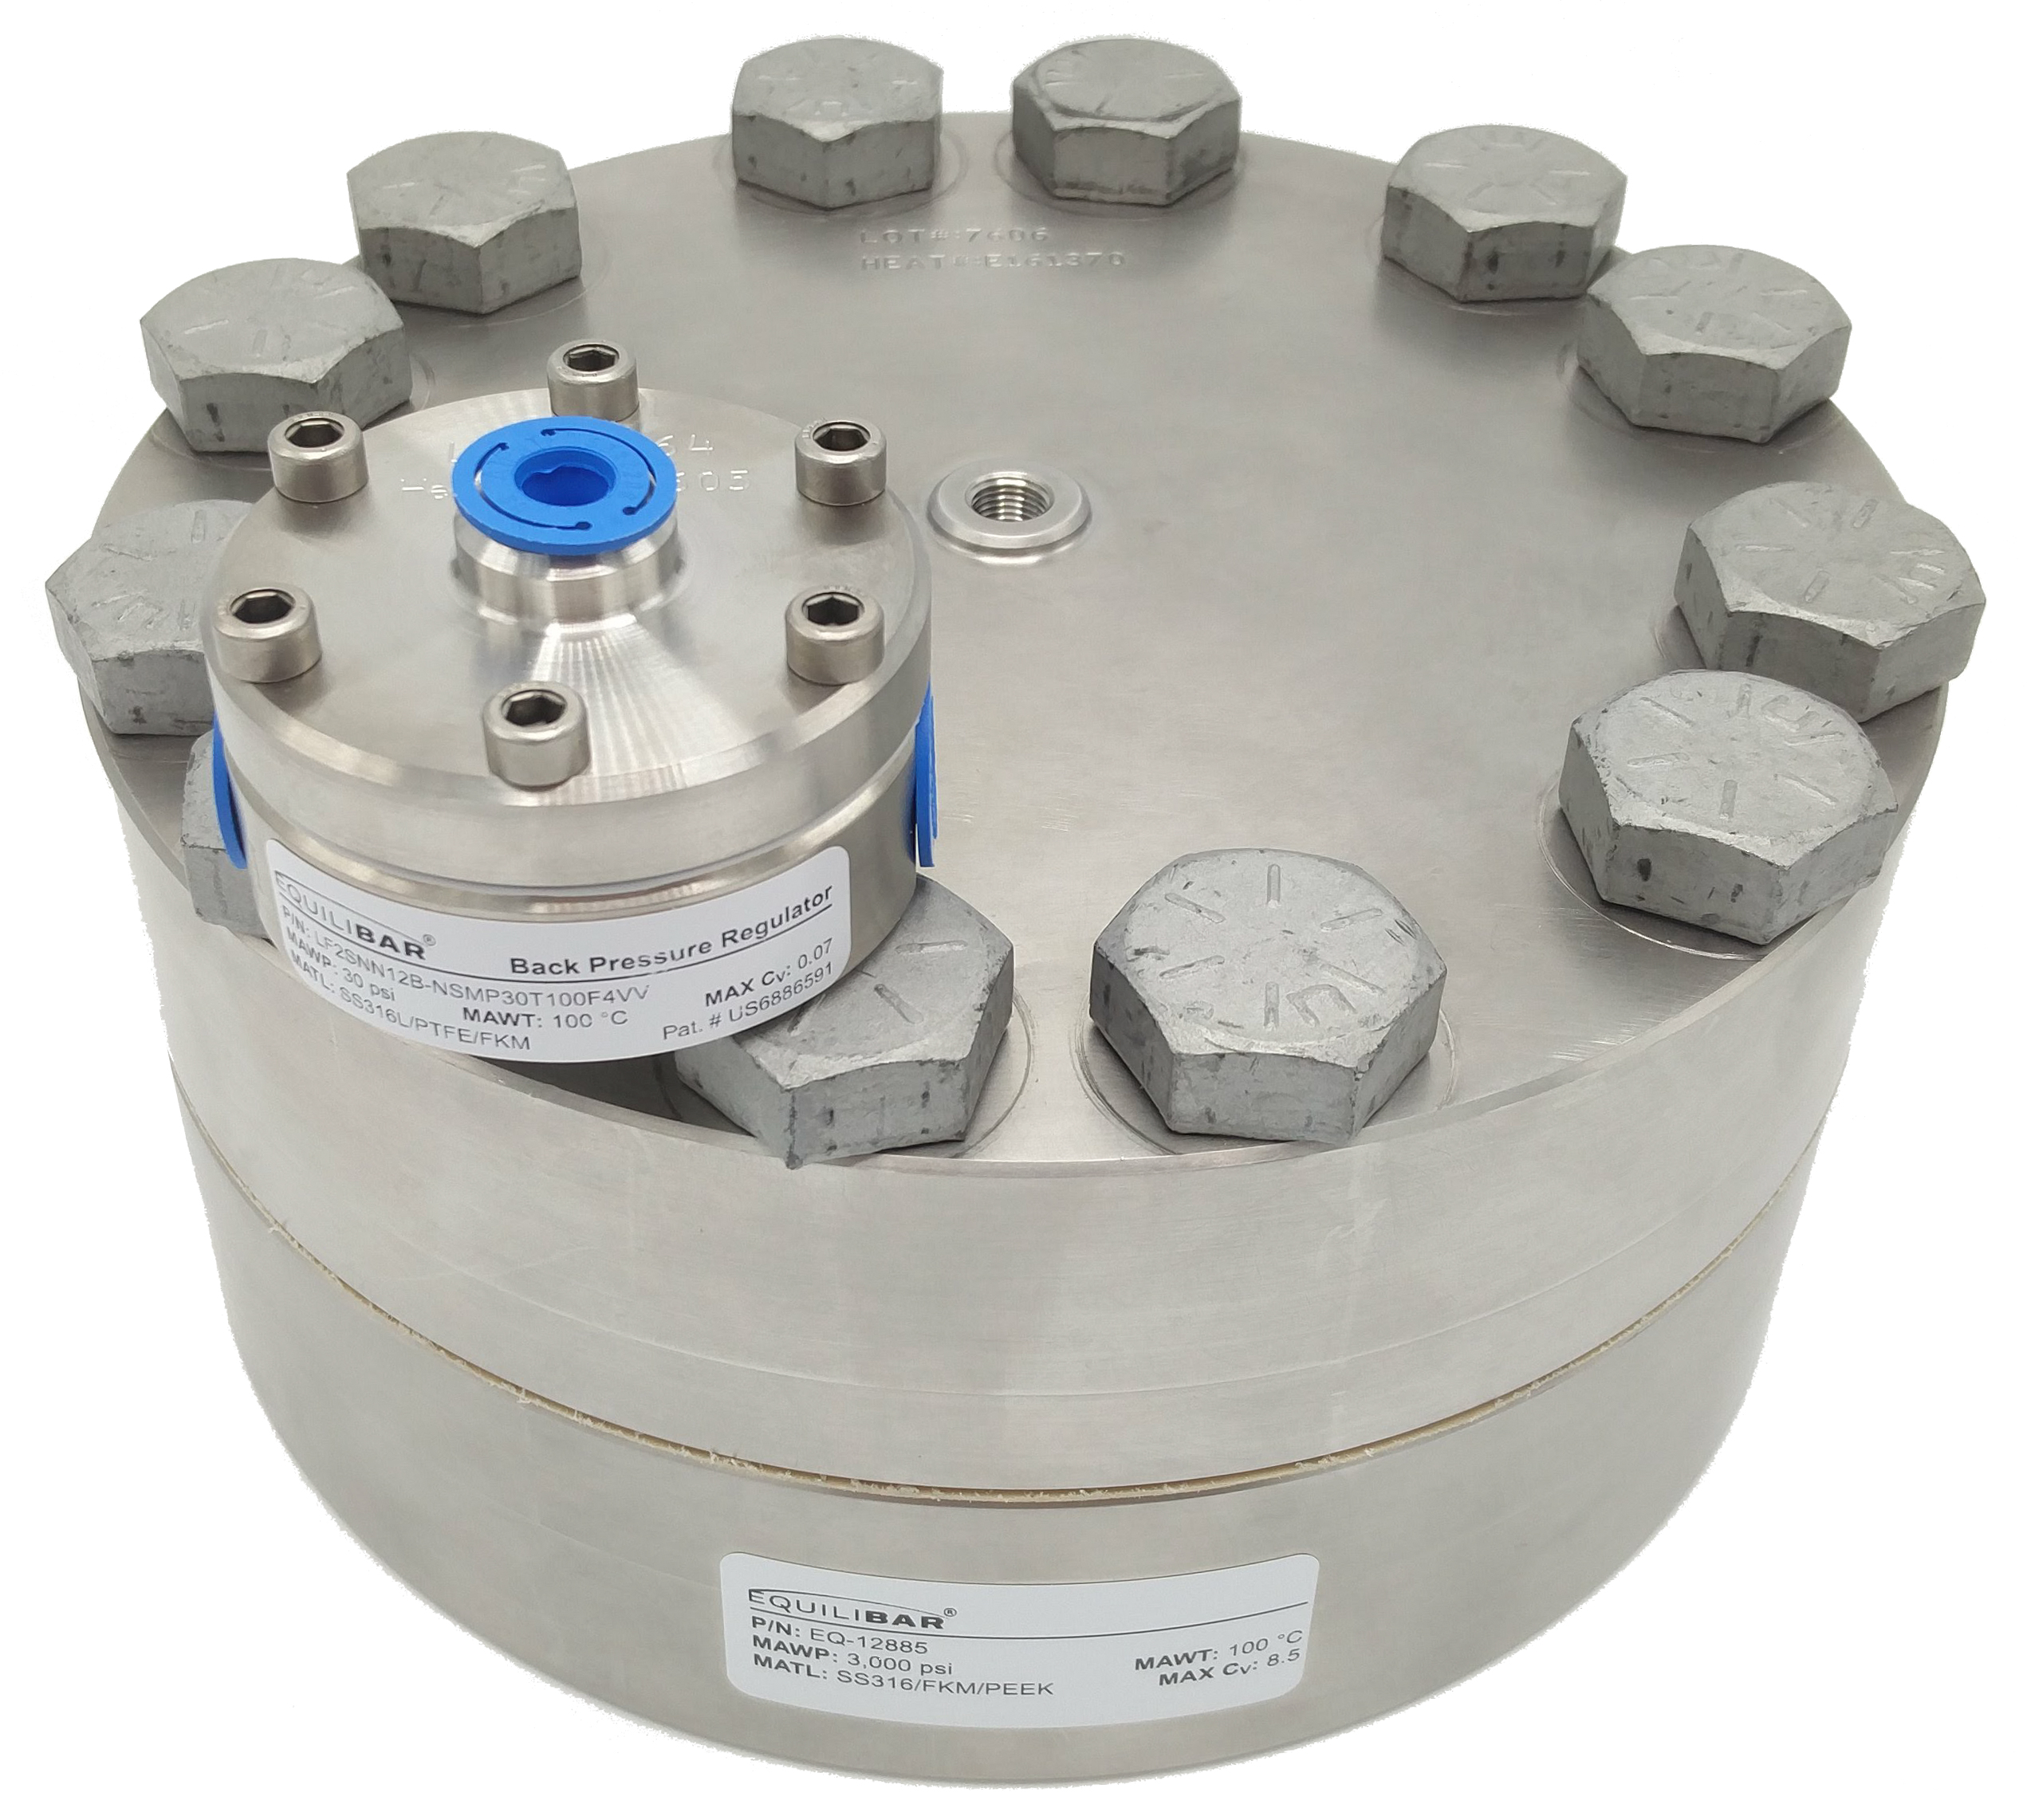 Low Flow back pressure regulators | PCS Precision Control Valves